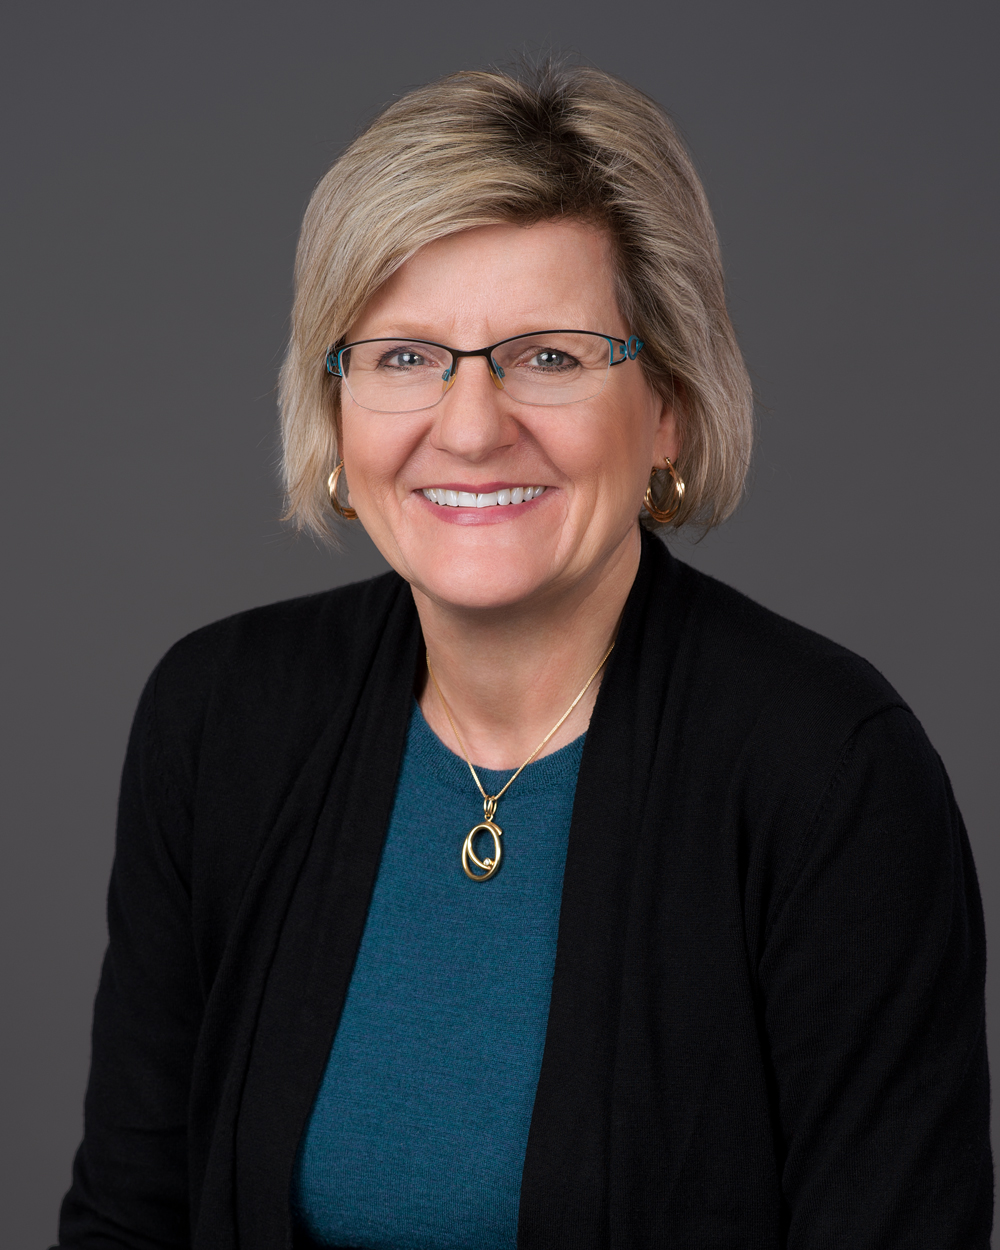 Karen McIntyre, Director General, Food Directorate, Health Canada